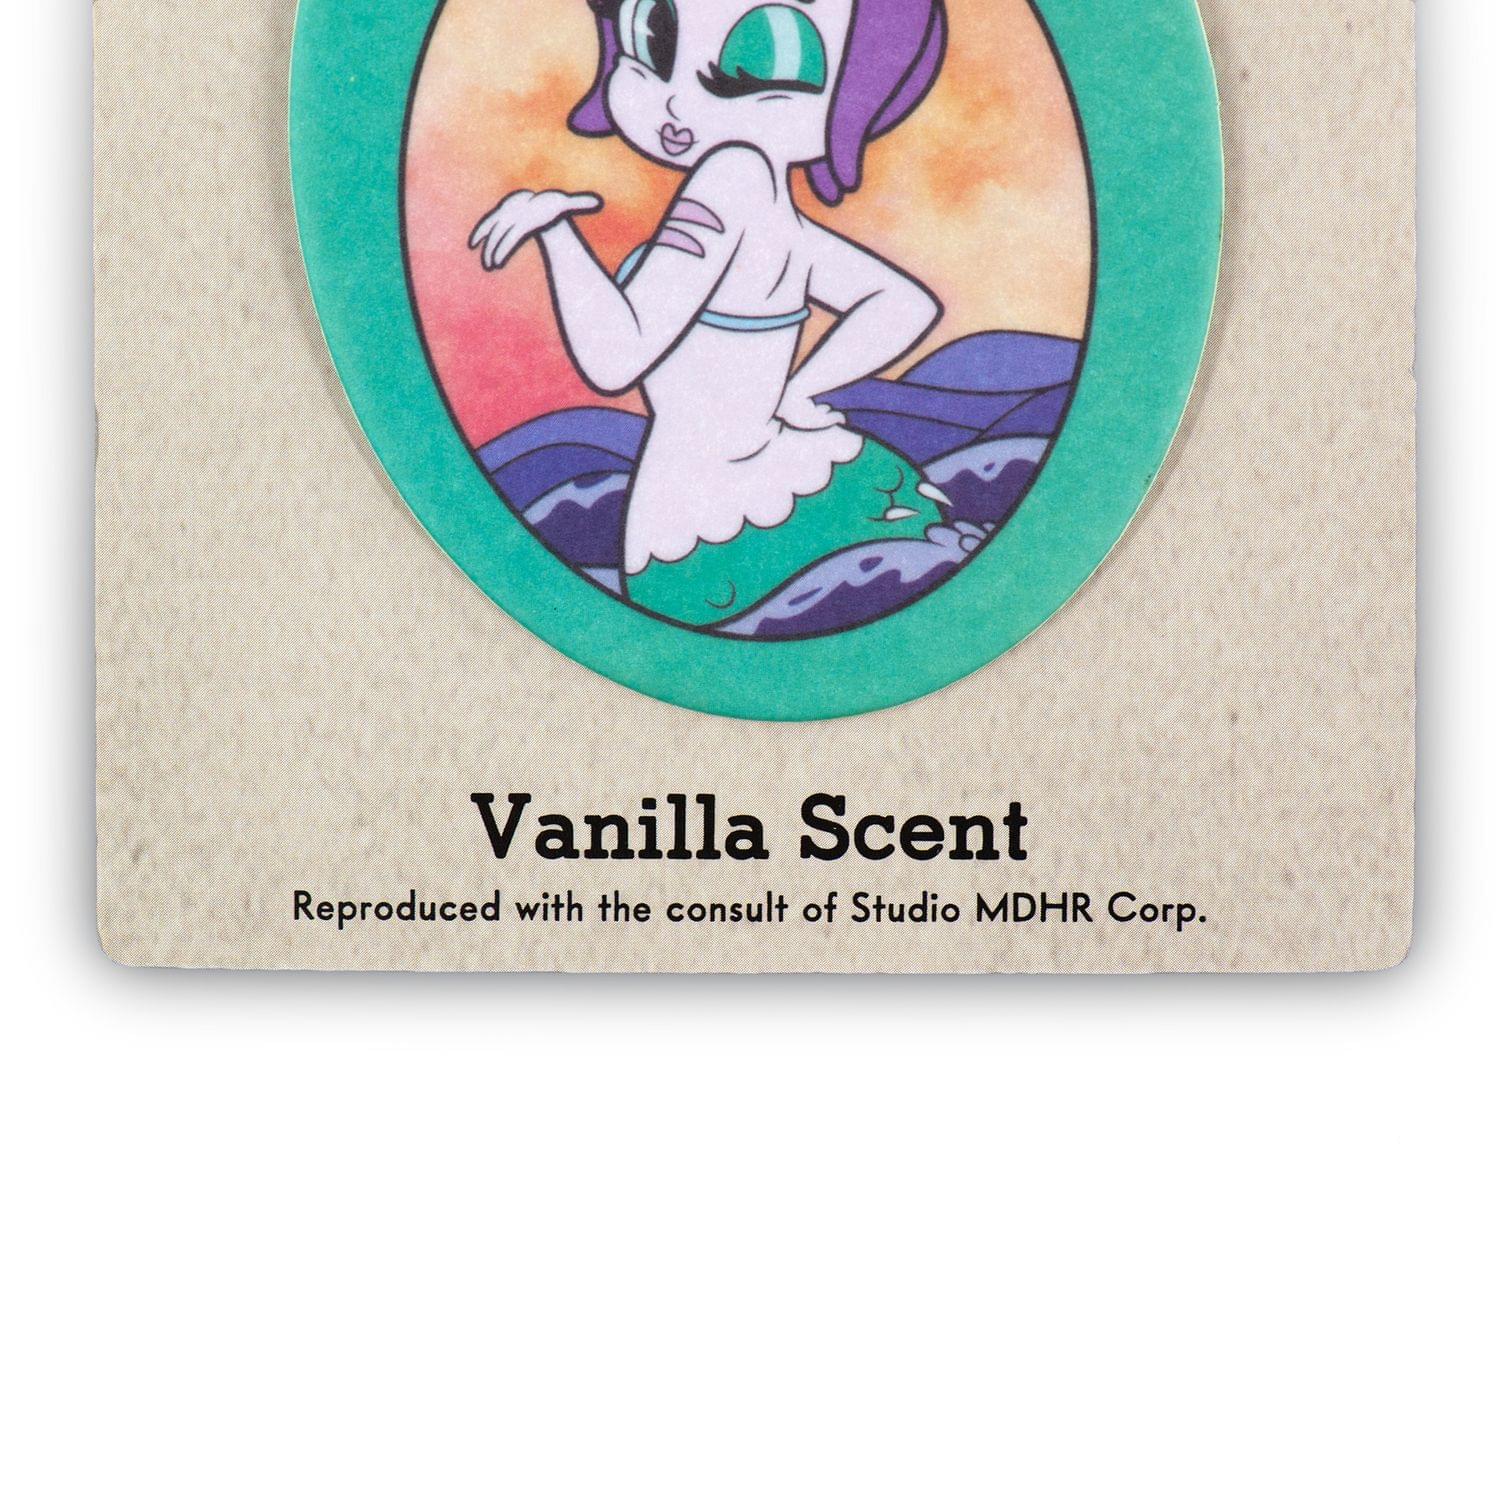 Cuphead Cala Maria Mermaid Boss Hanging Air Freshener, Vanilla Scent